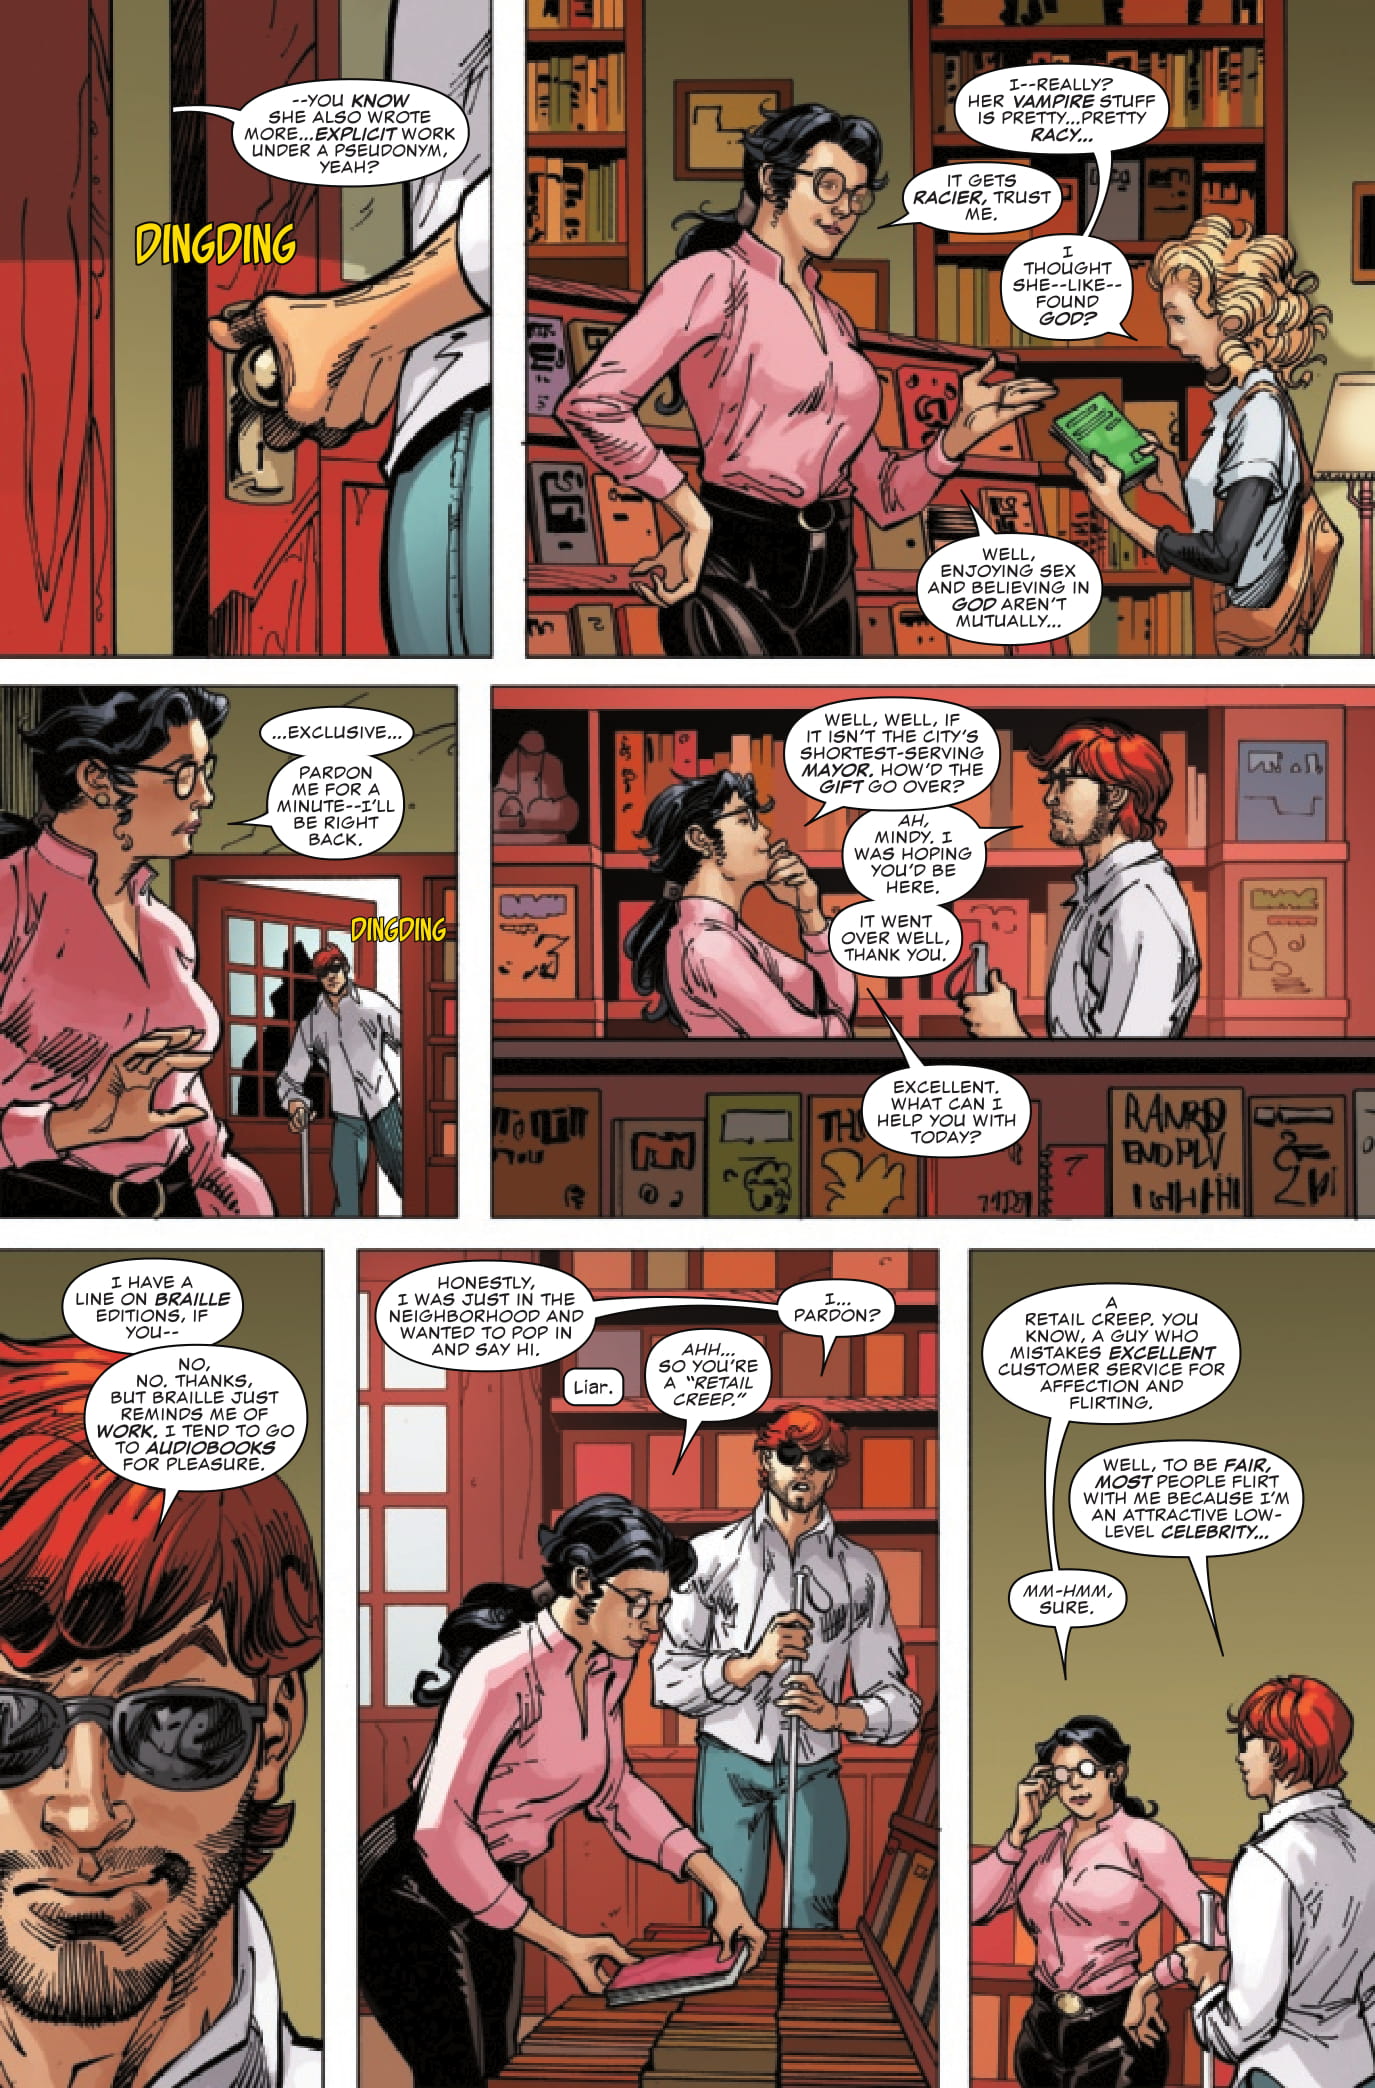 Daredevil #8 preview page 1